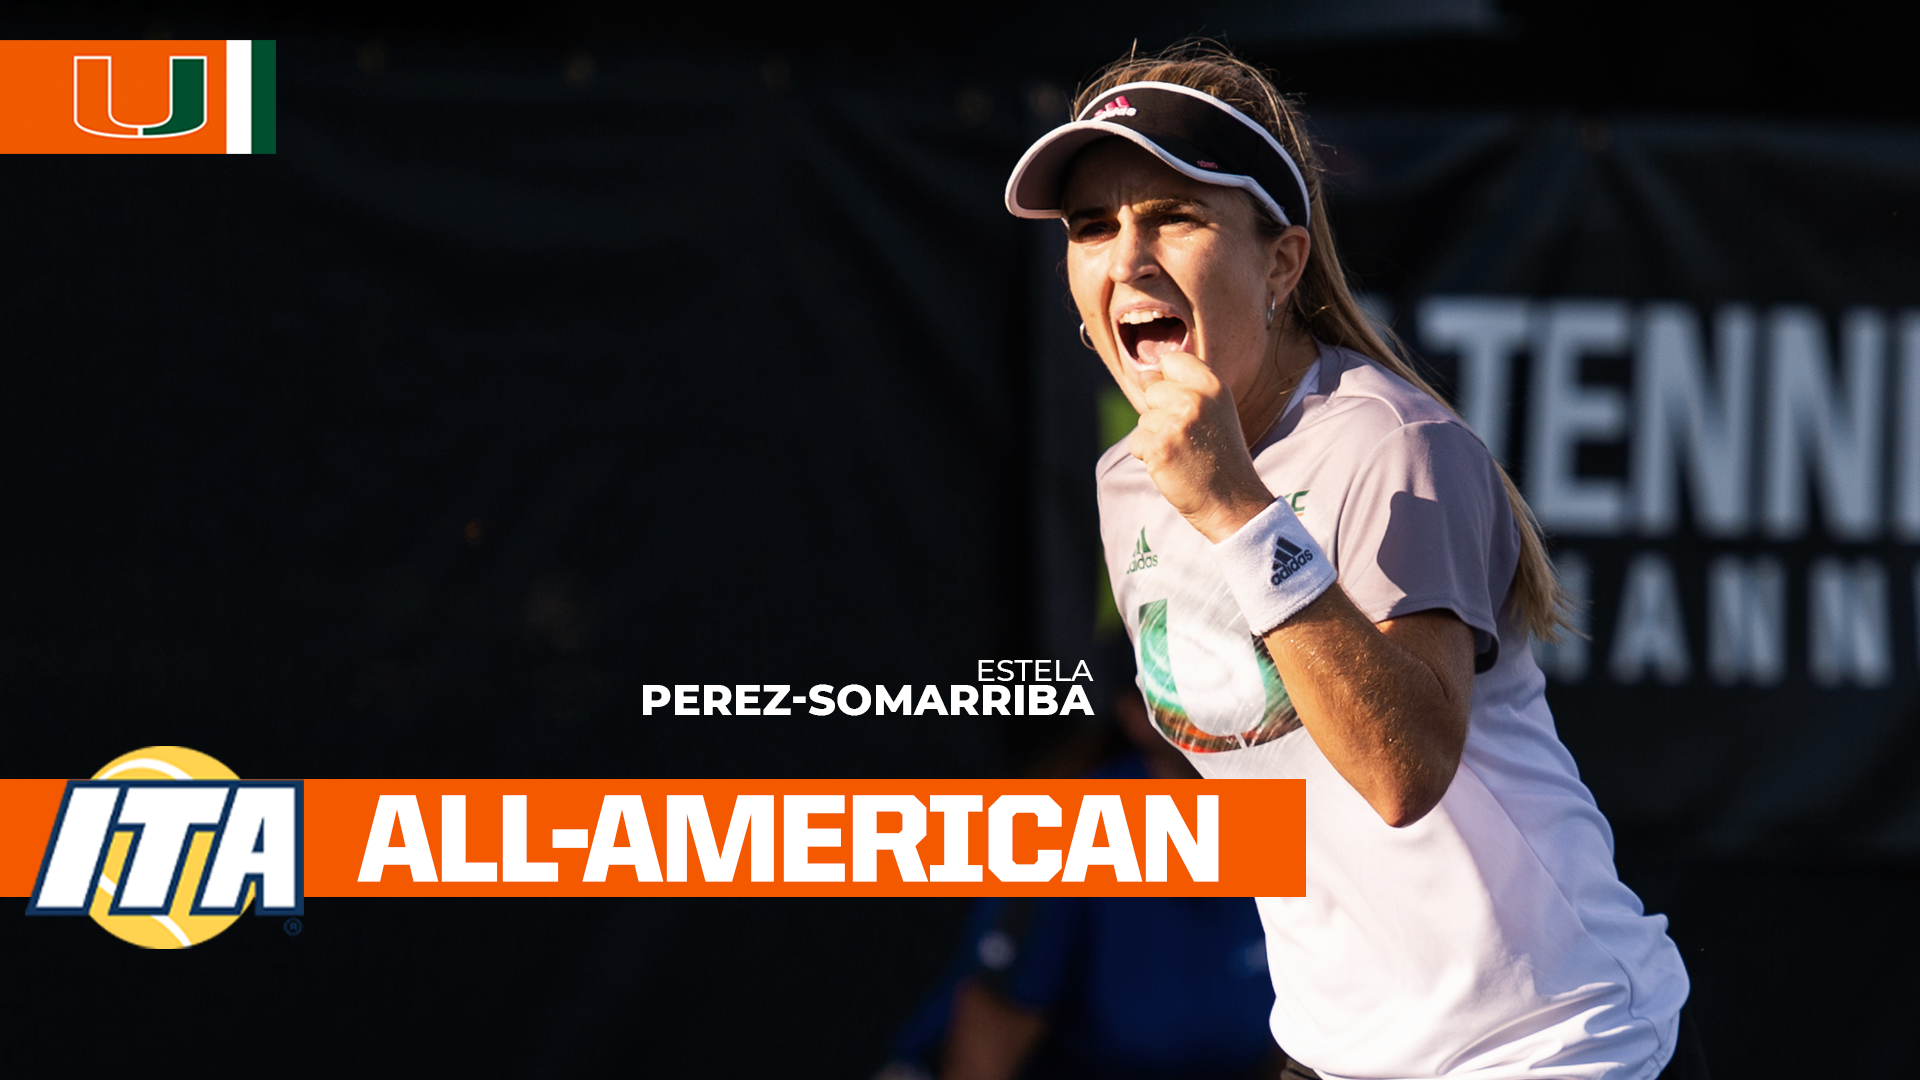 Perez-Somarriba Named an ITA All-American